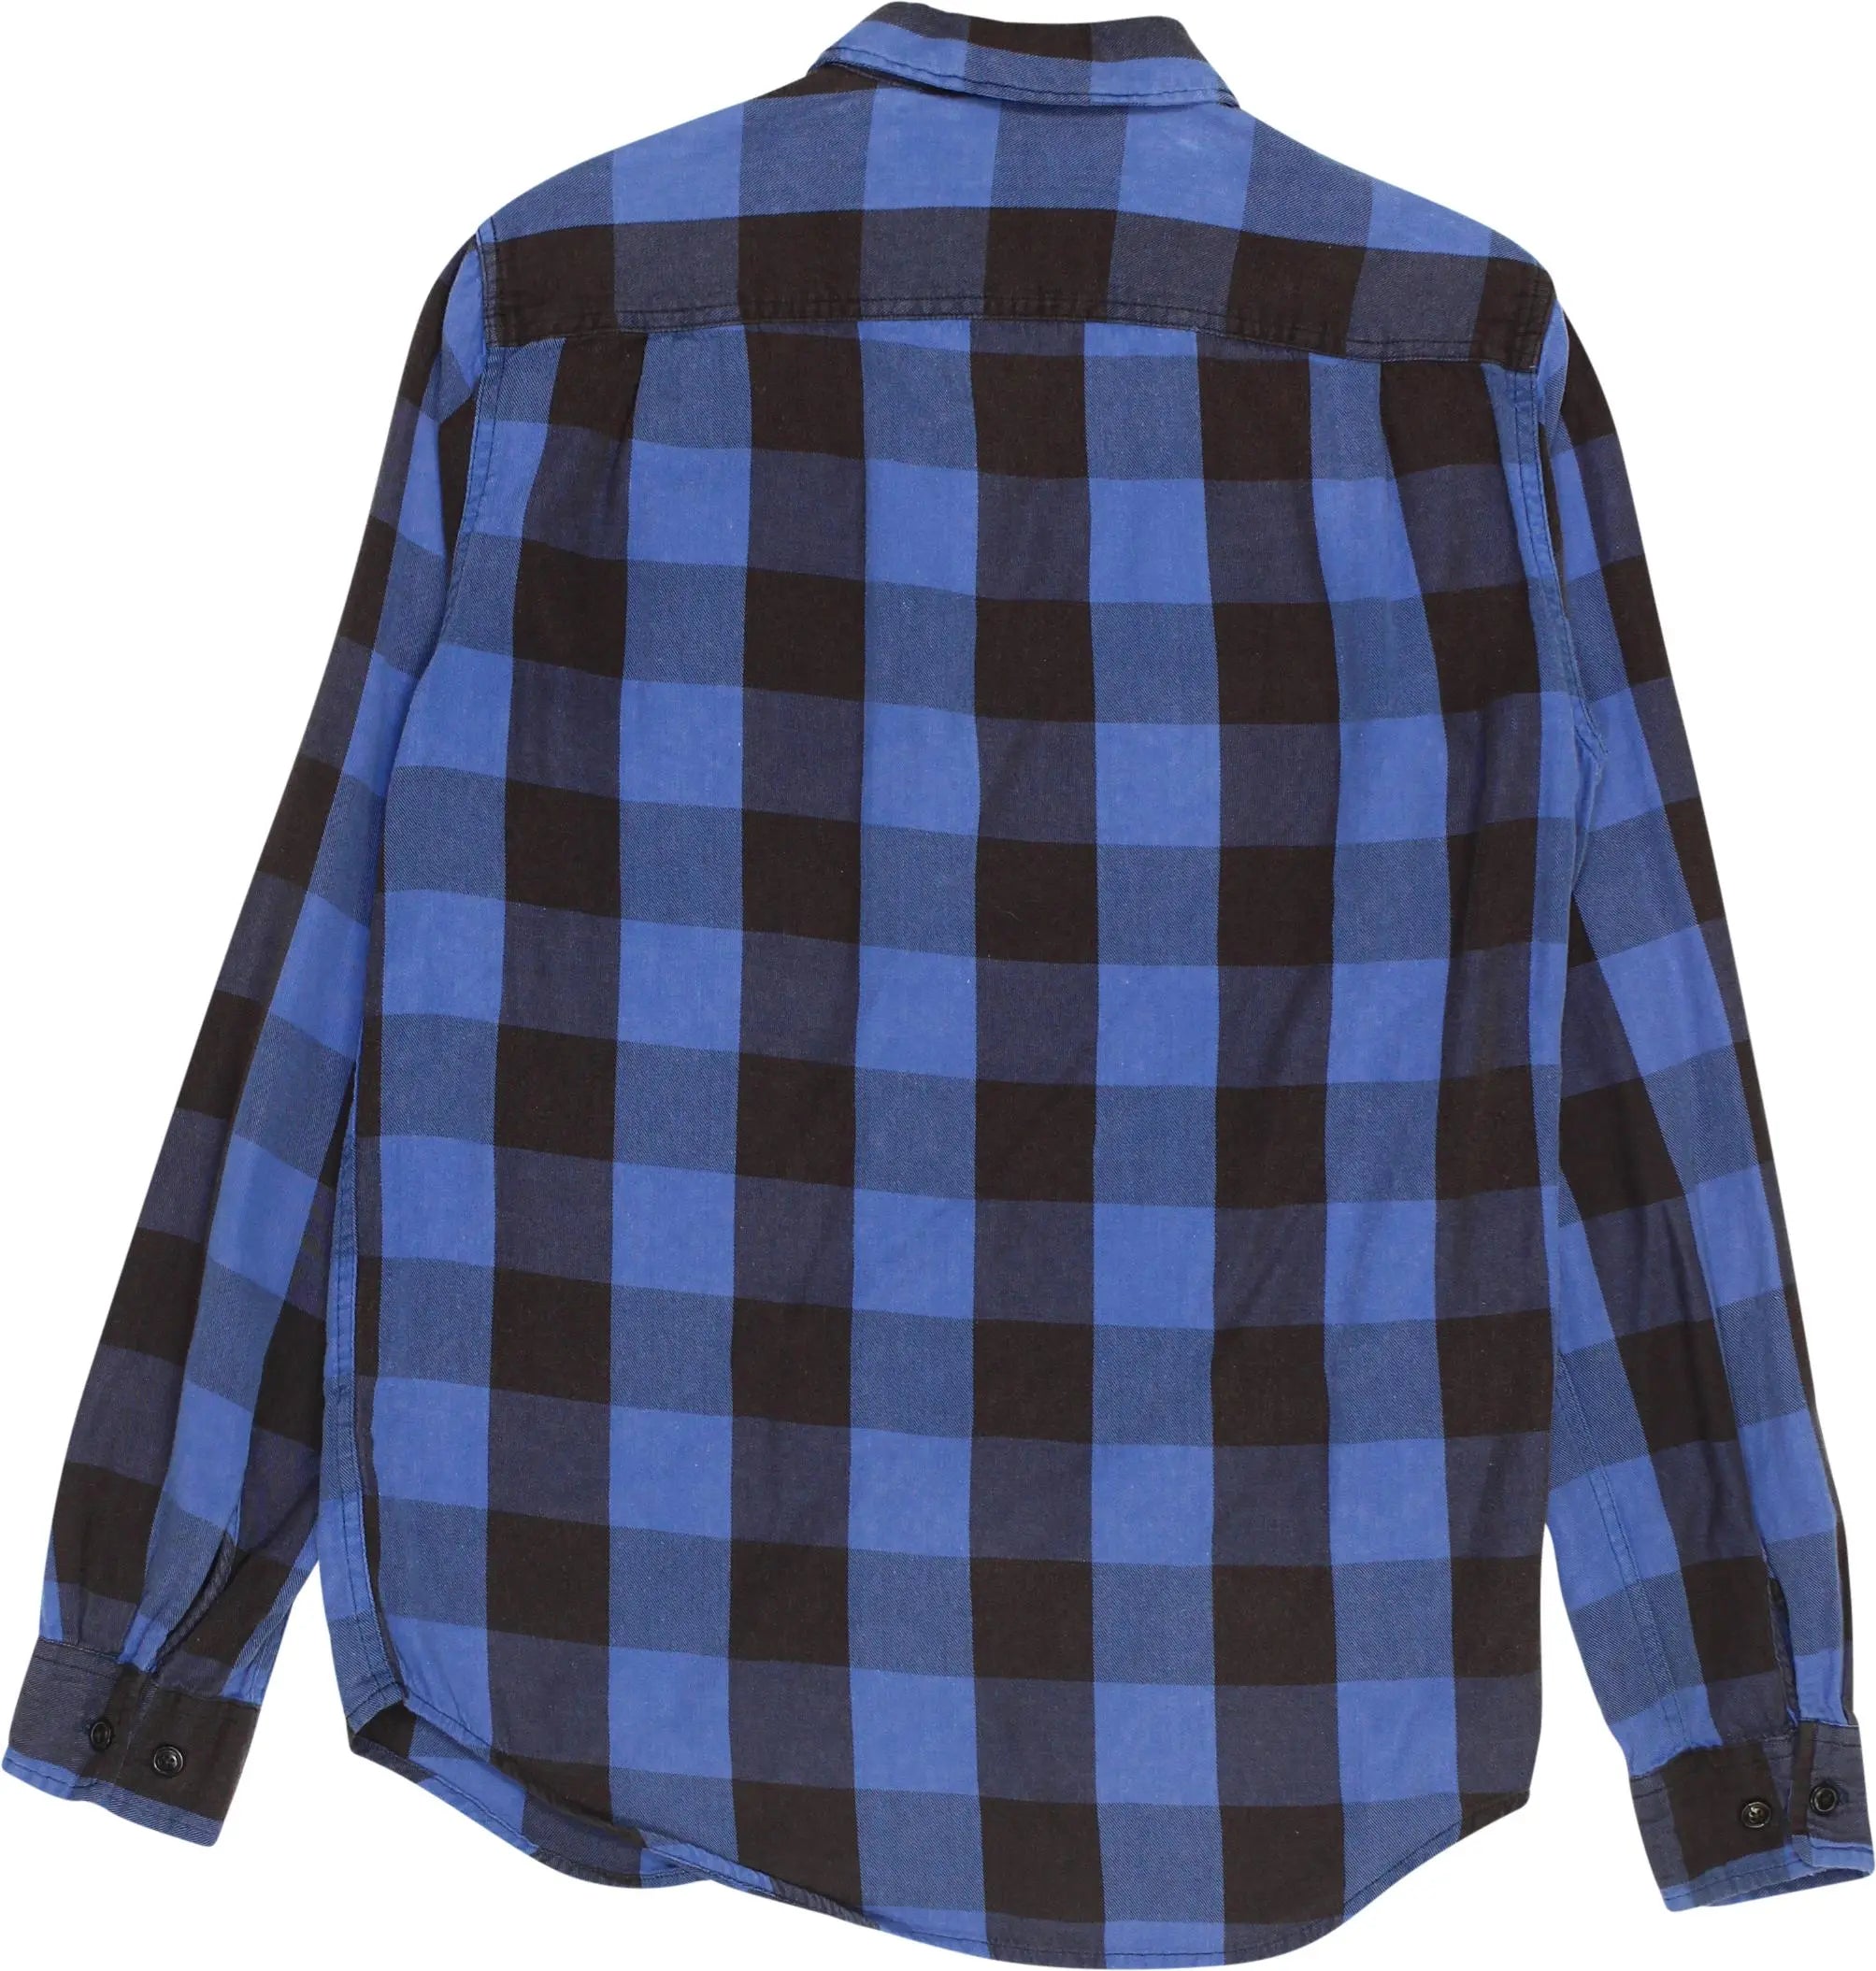 Ralph Lauren - Checkered shirt by Ralph Lauren- ThriftTale.com - Vintage and second handclothing